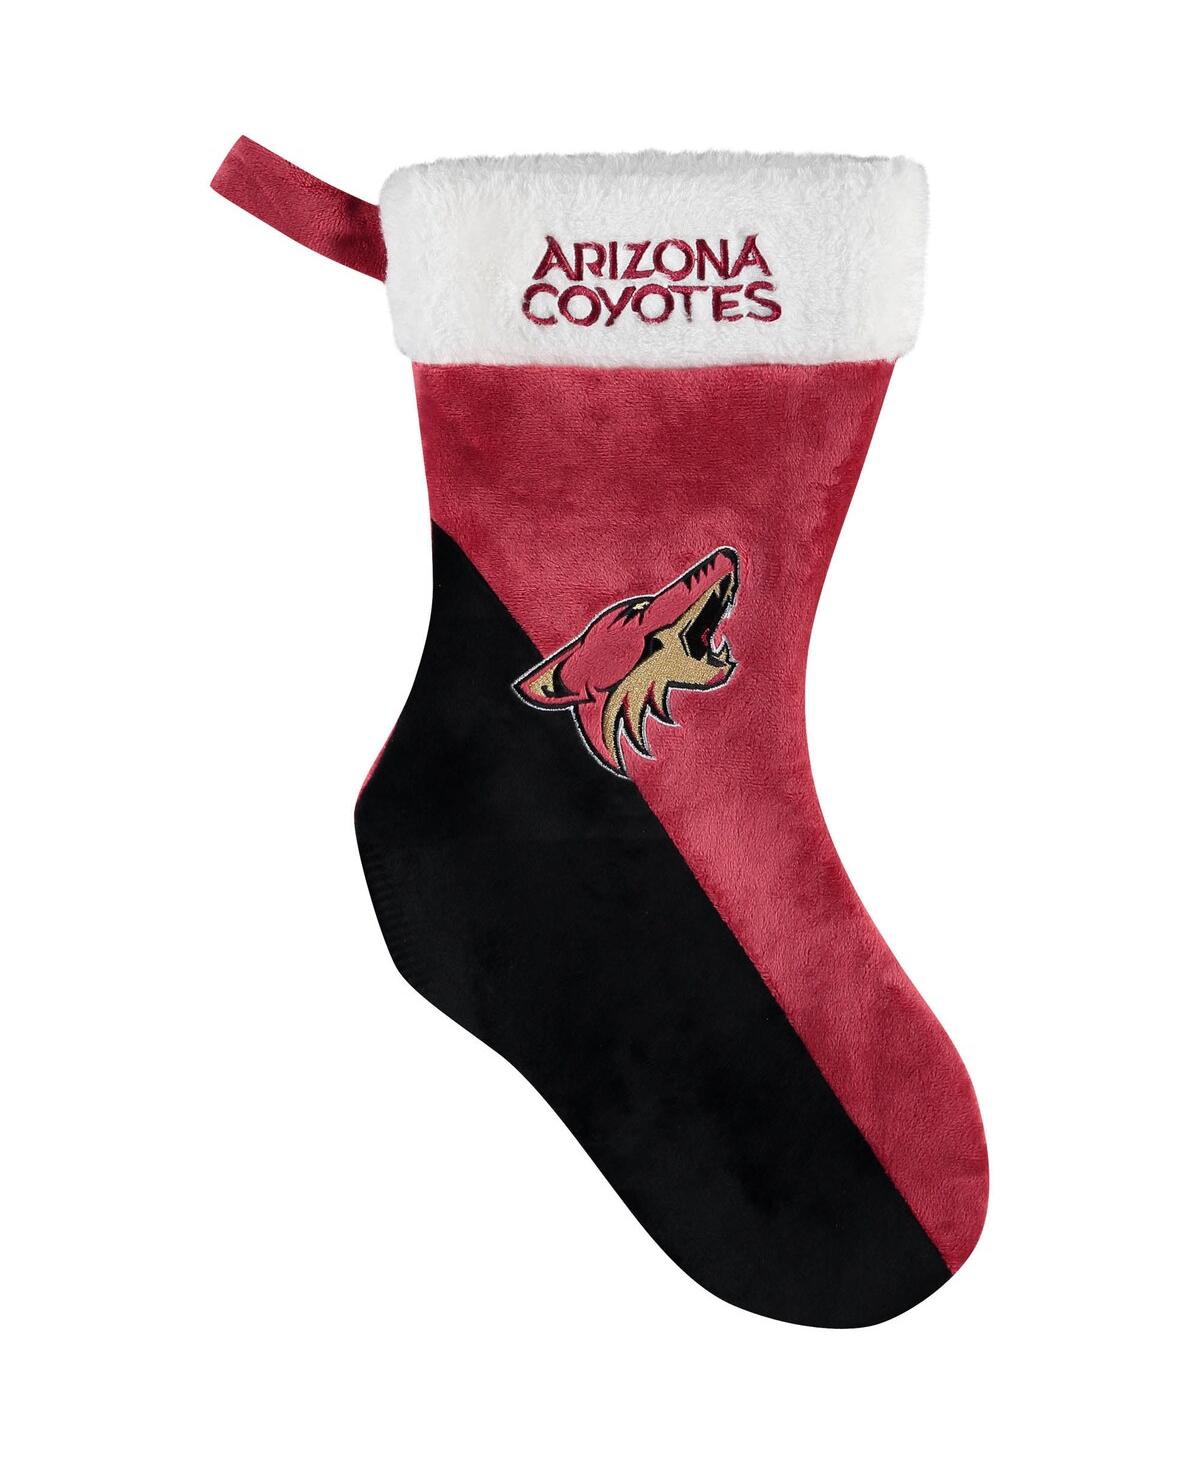 Arizona Coyotes Holiday Stocking - Black, Red